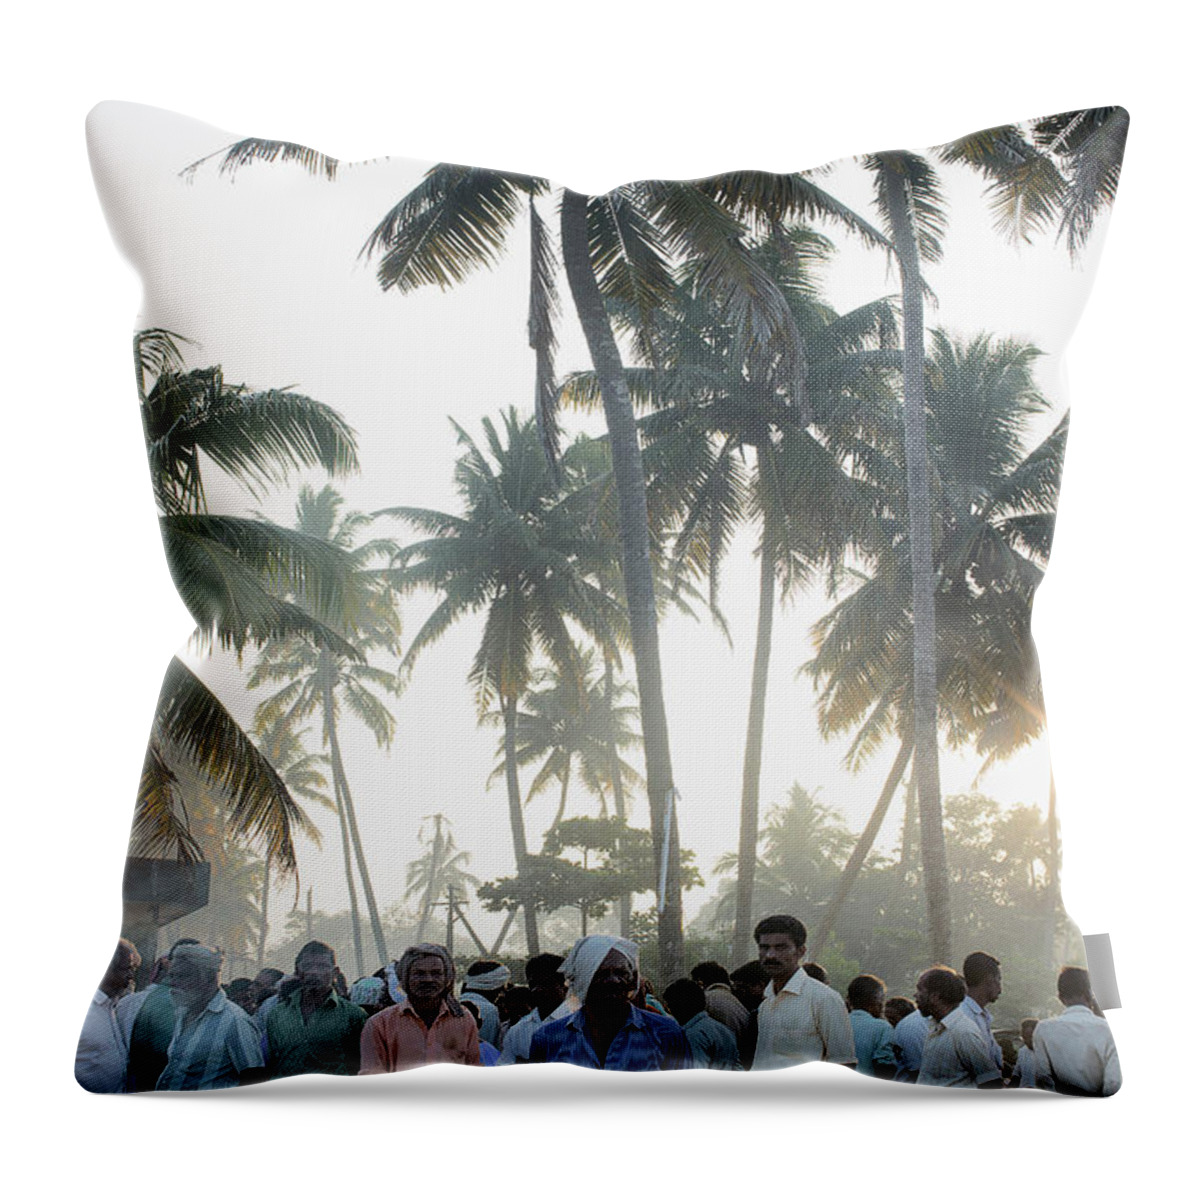 Young Men Throw Pillow featuring the photograph Crowd Of Men Kerala, India by Gary John Norman